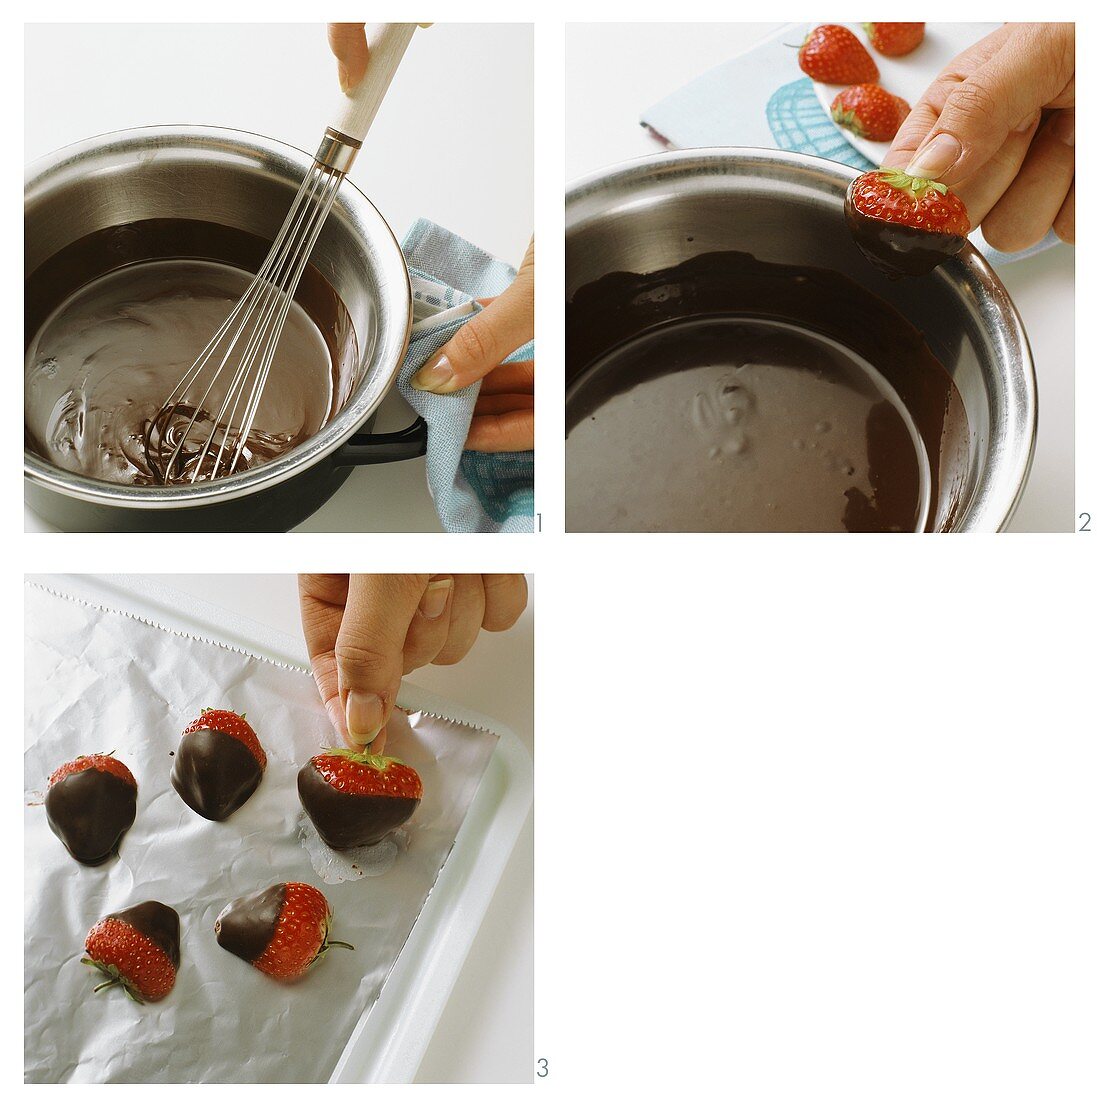 Making chocolate-dipped strawberries